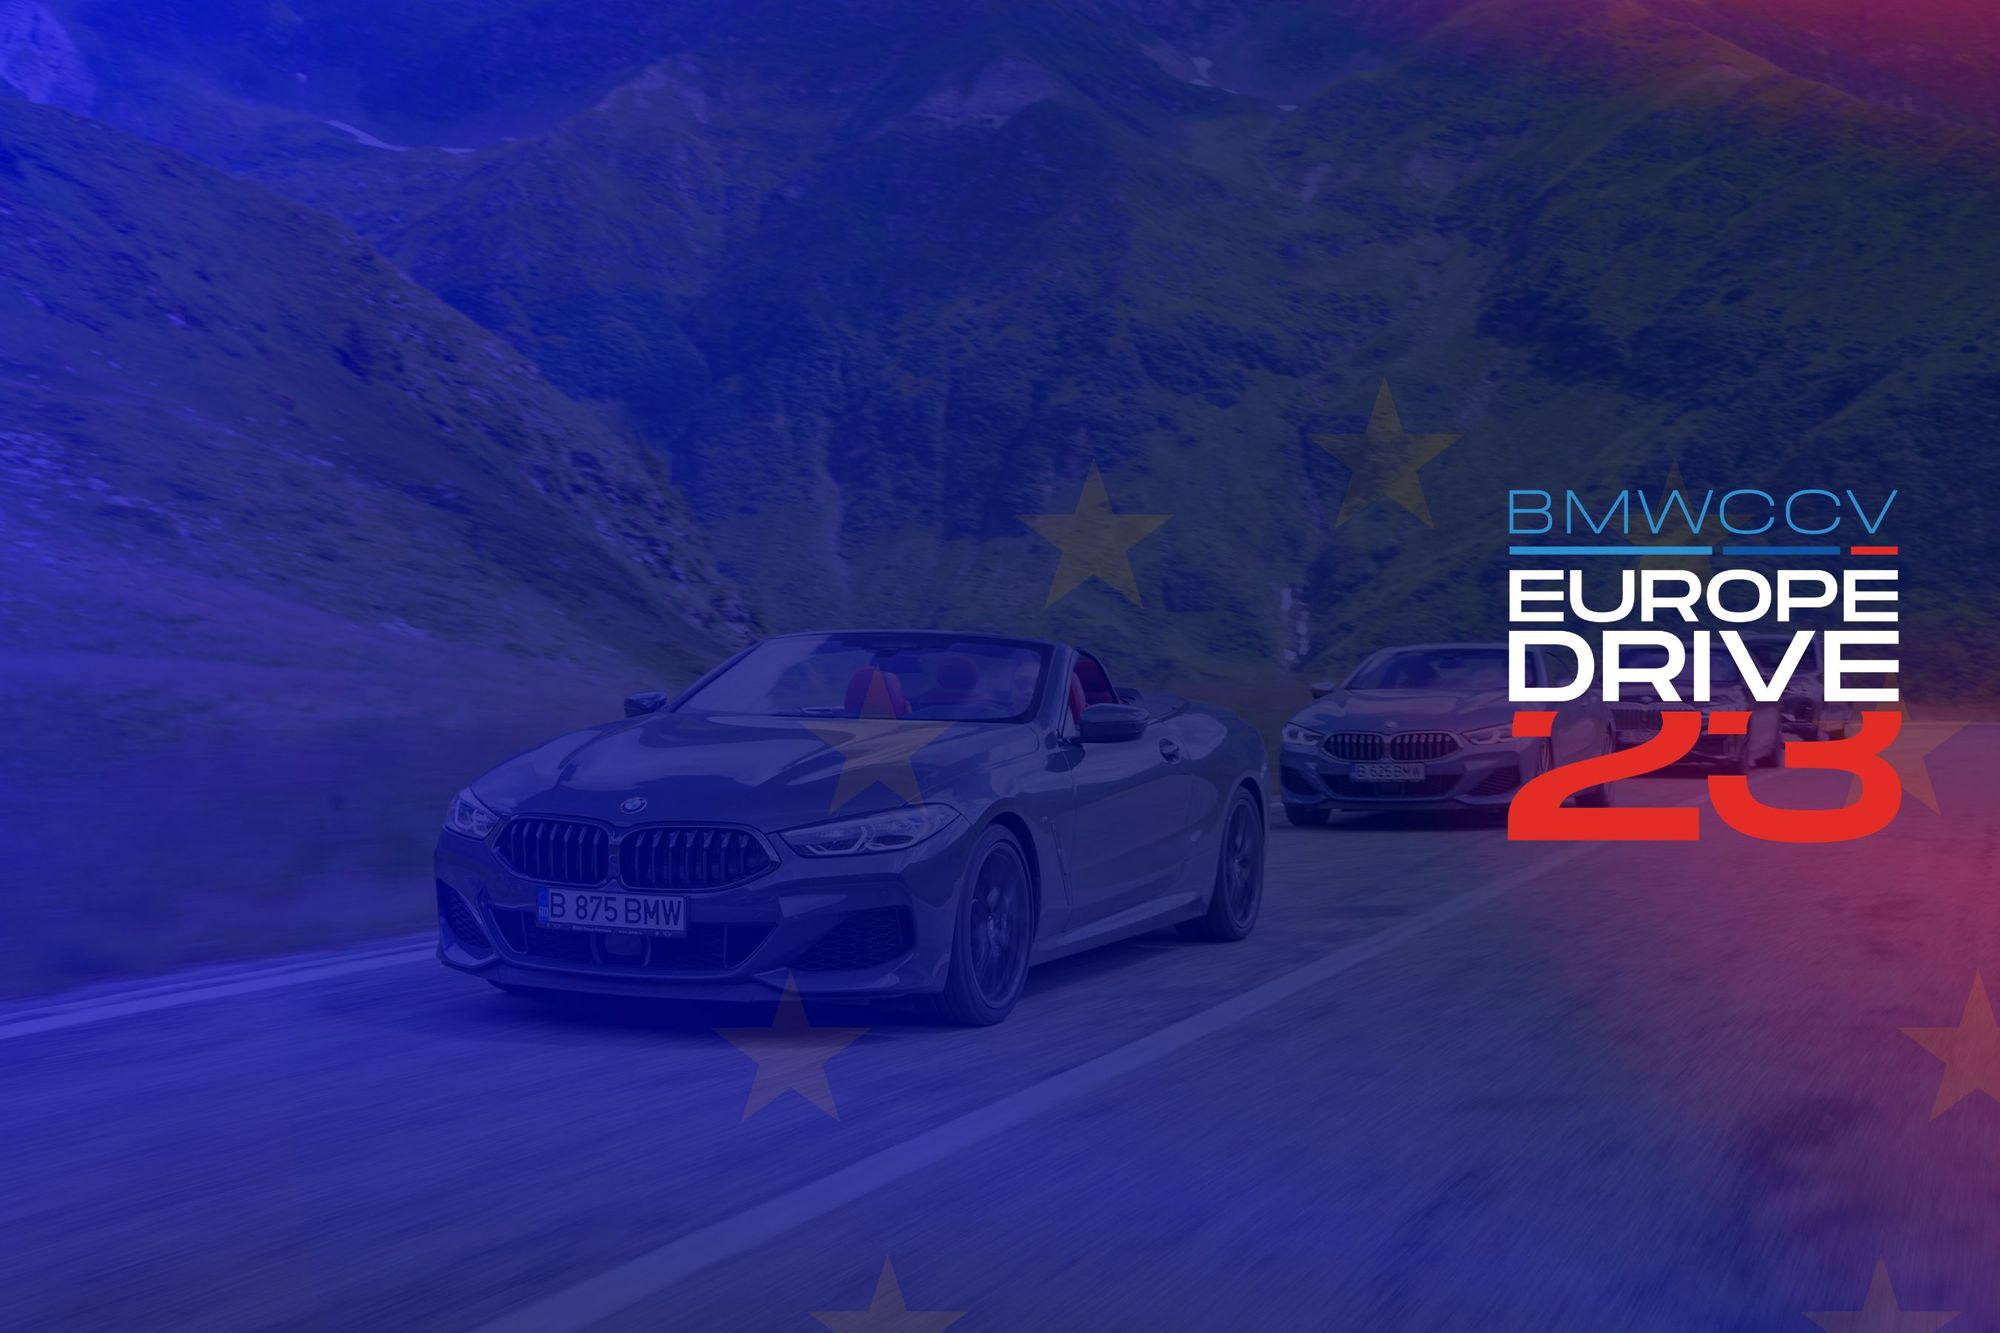 BMWCCV Europe Drive 2023